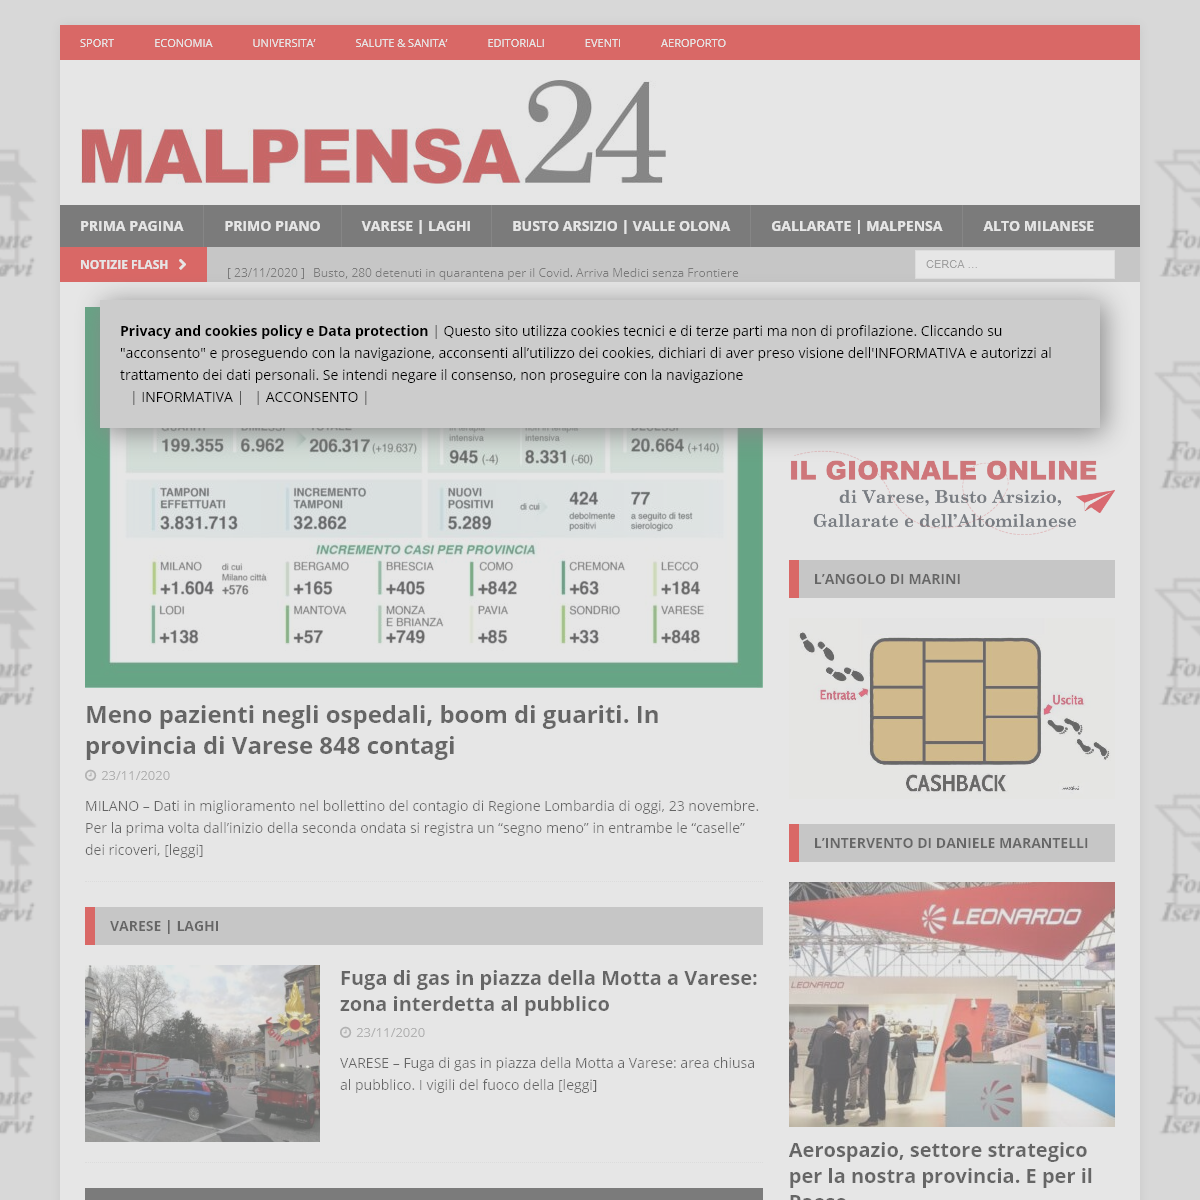 A complete backup of malpensa24.it